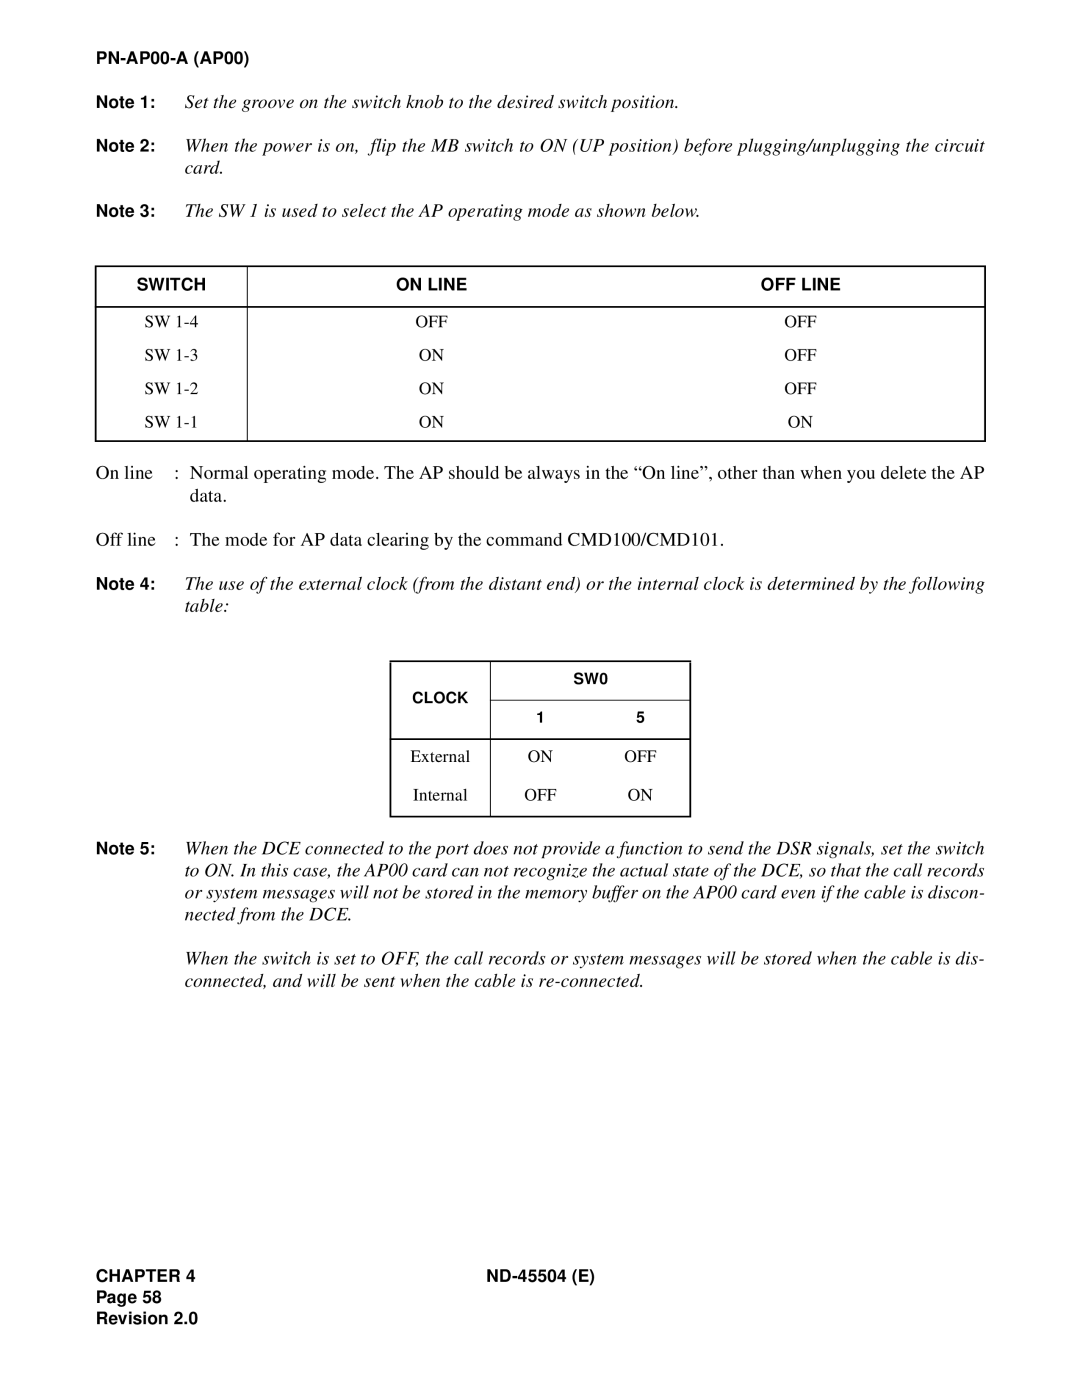 NEC 2000 IVS manual On line, data, Off line 